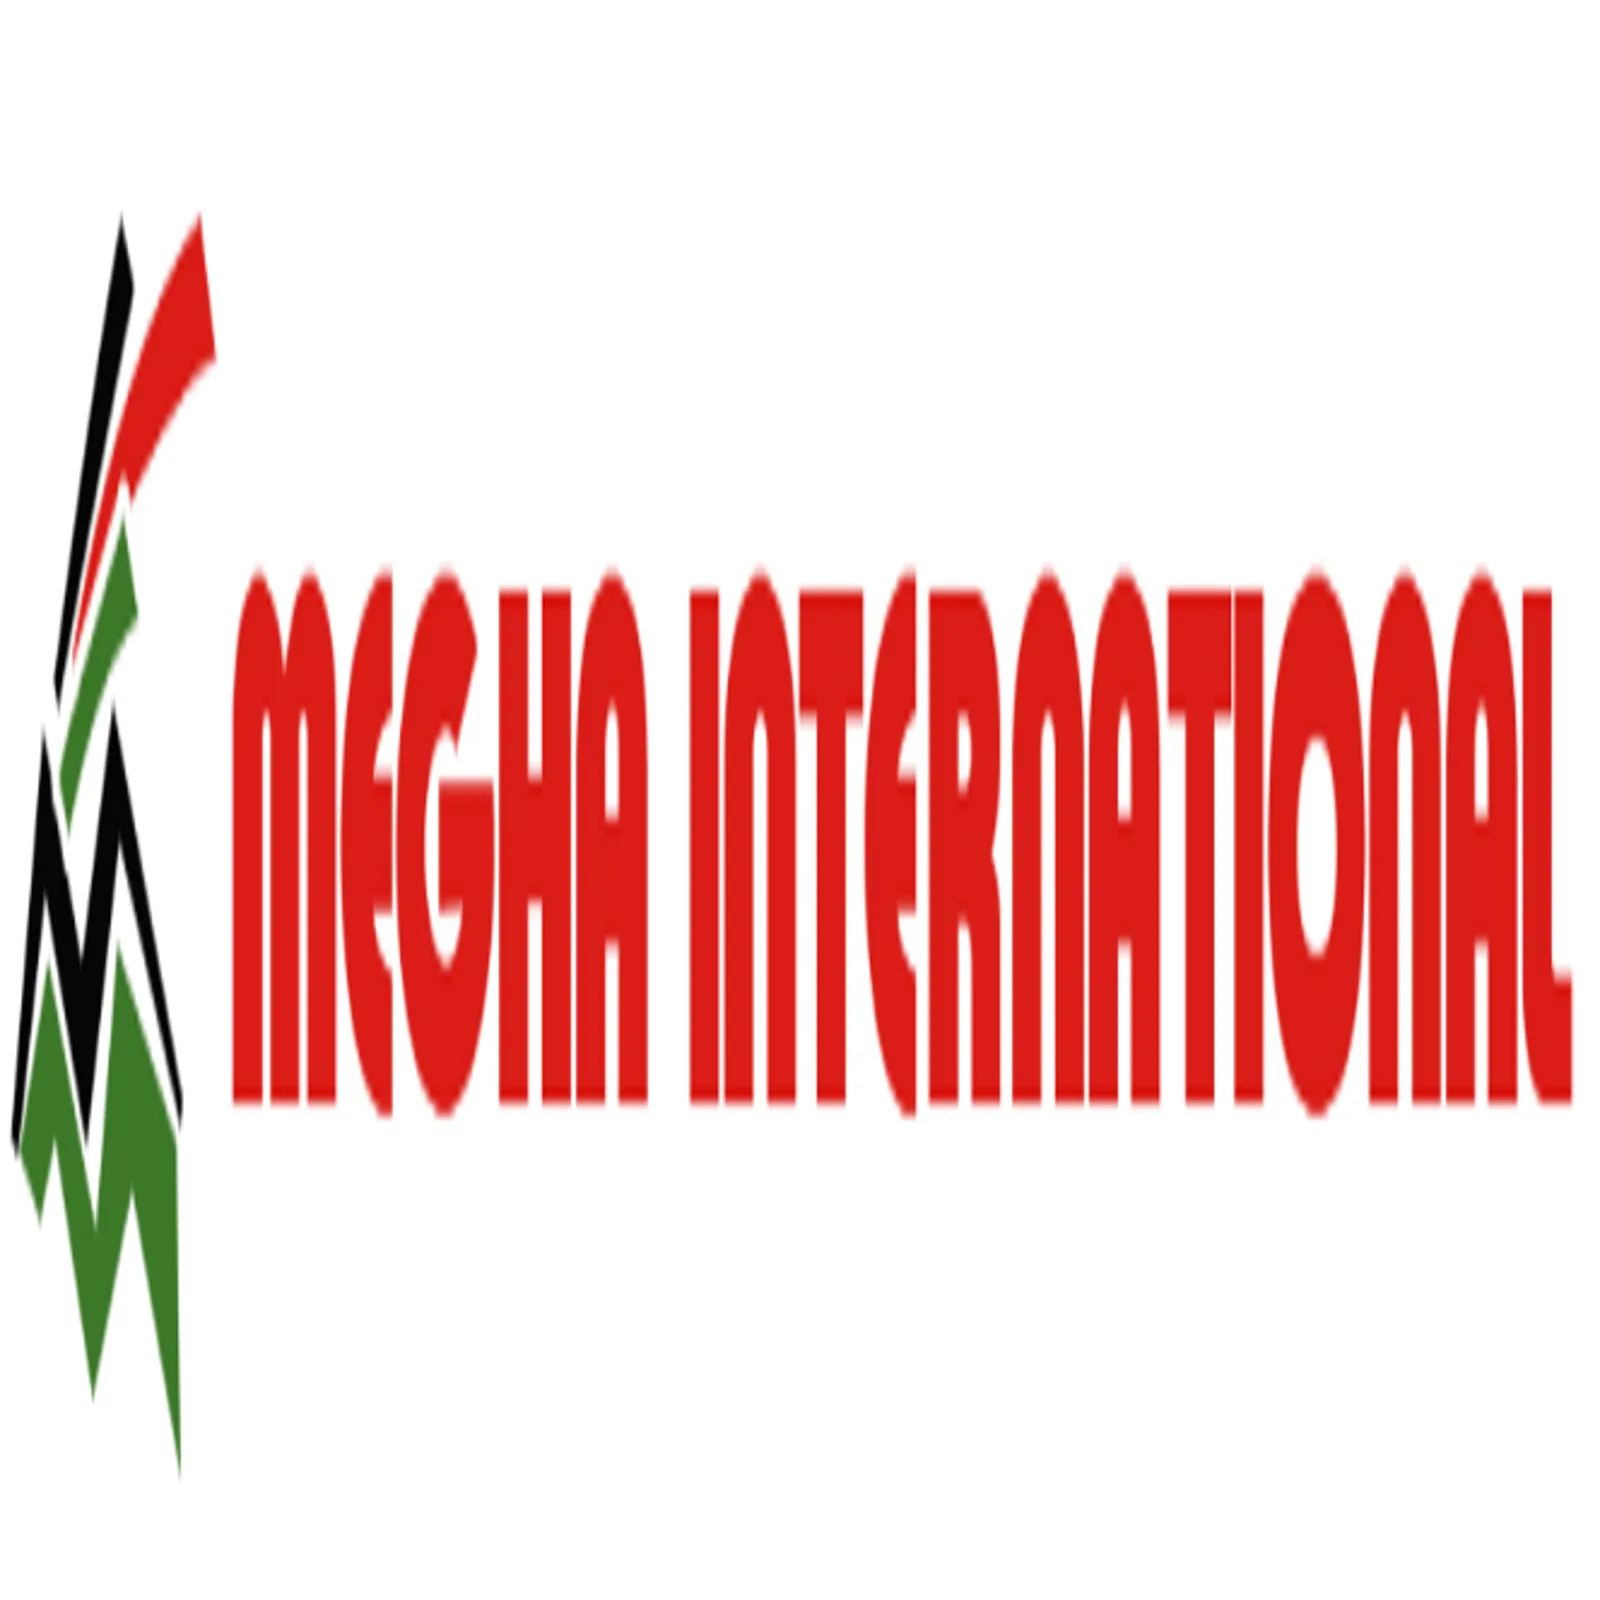 Megha International Company Profile, information, investors, valuation ...